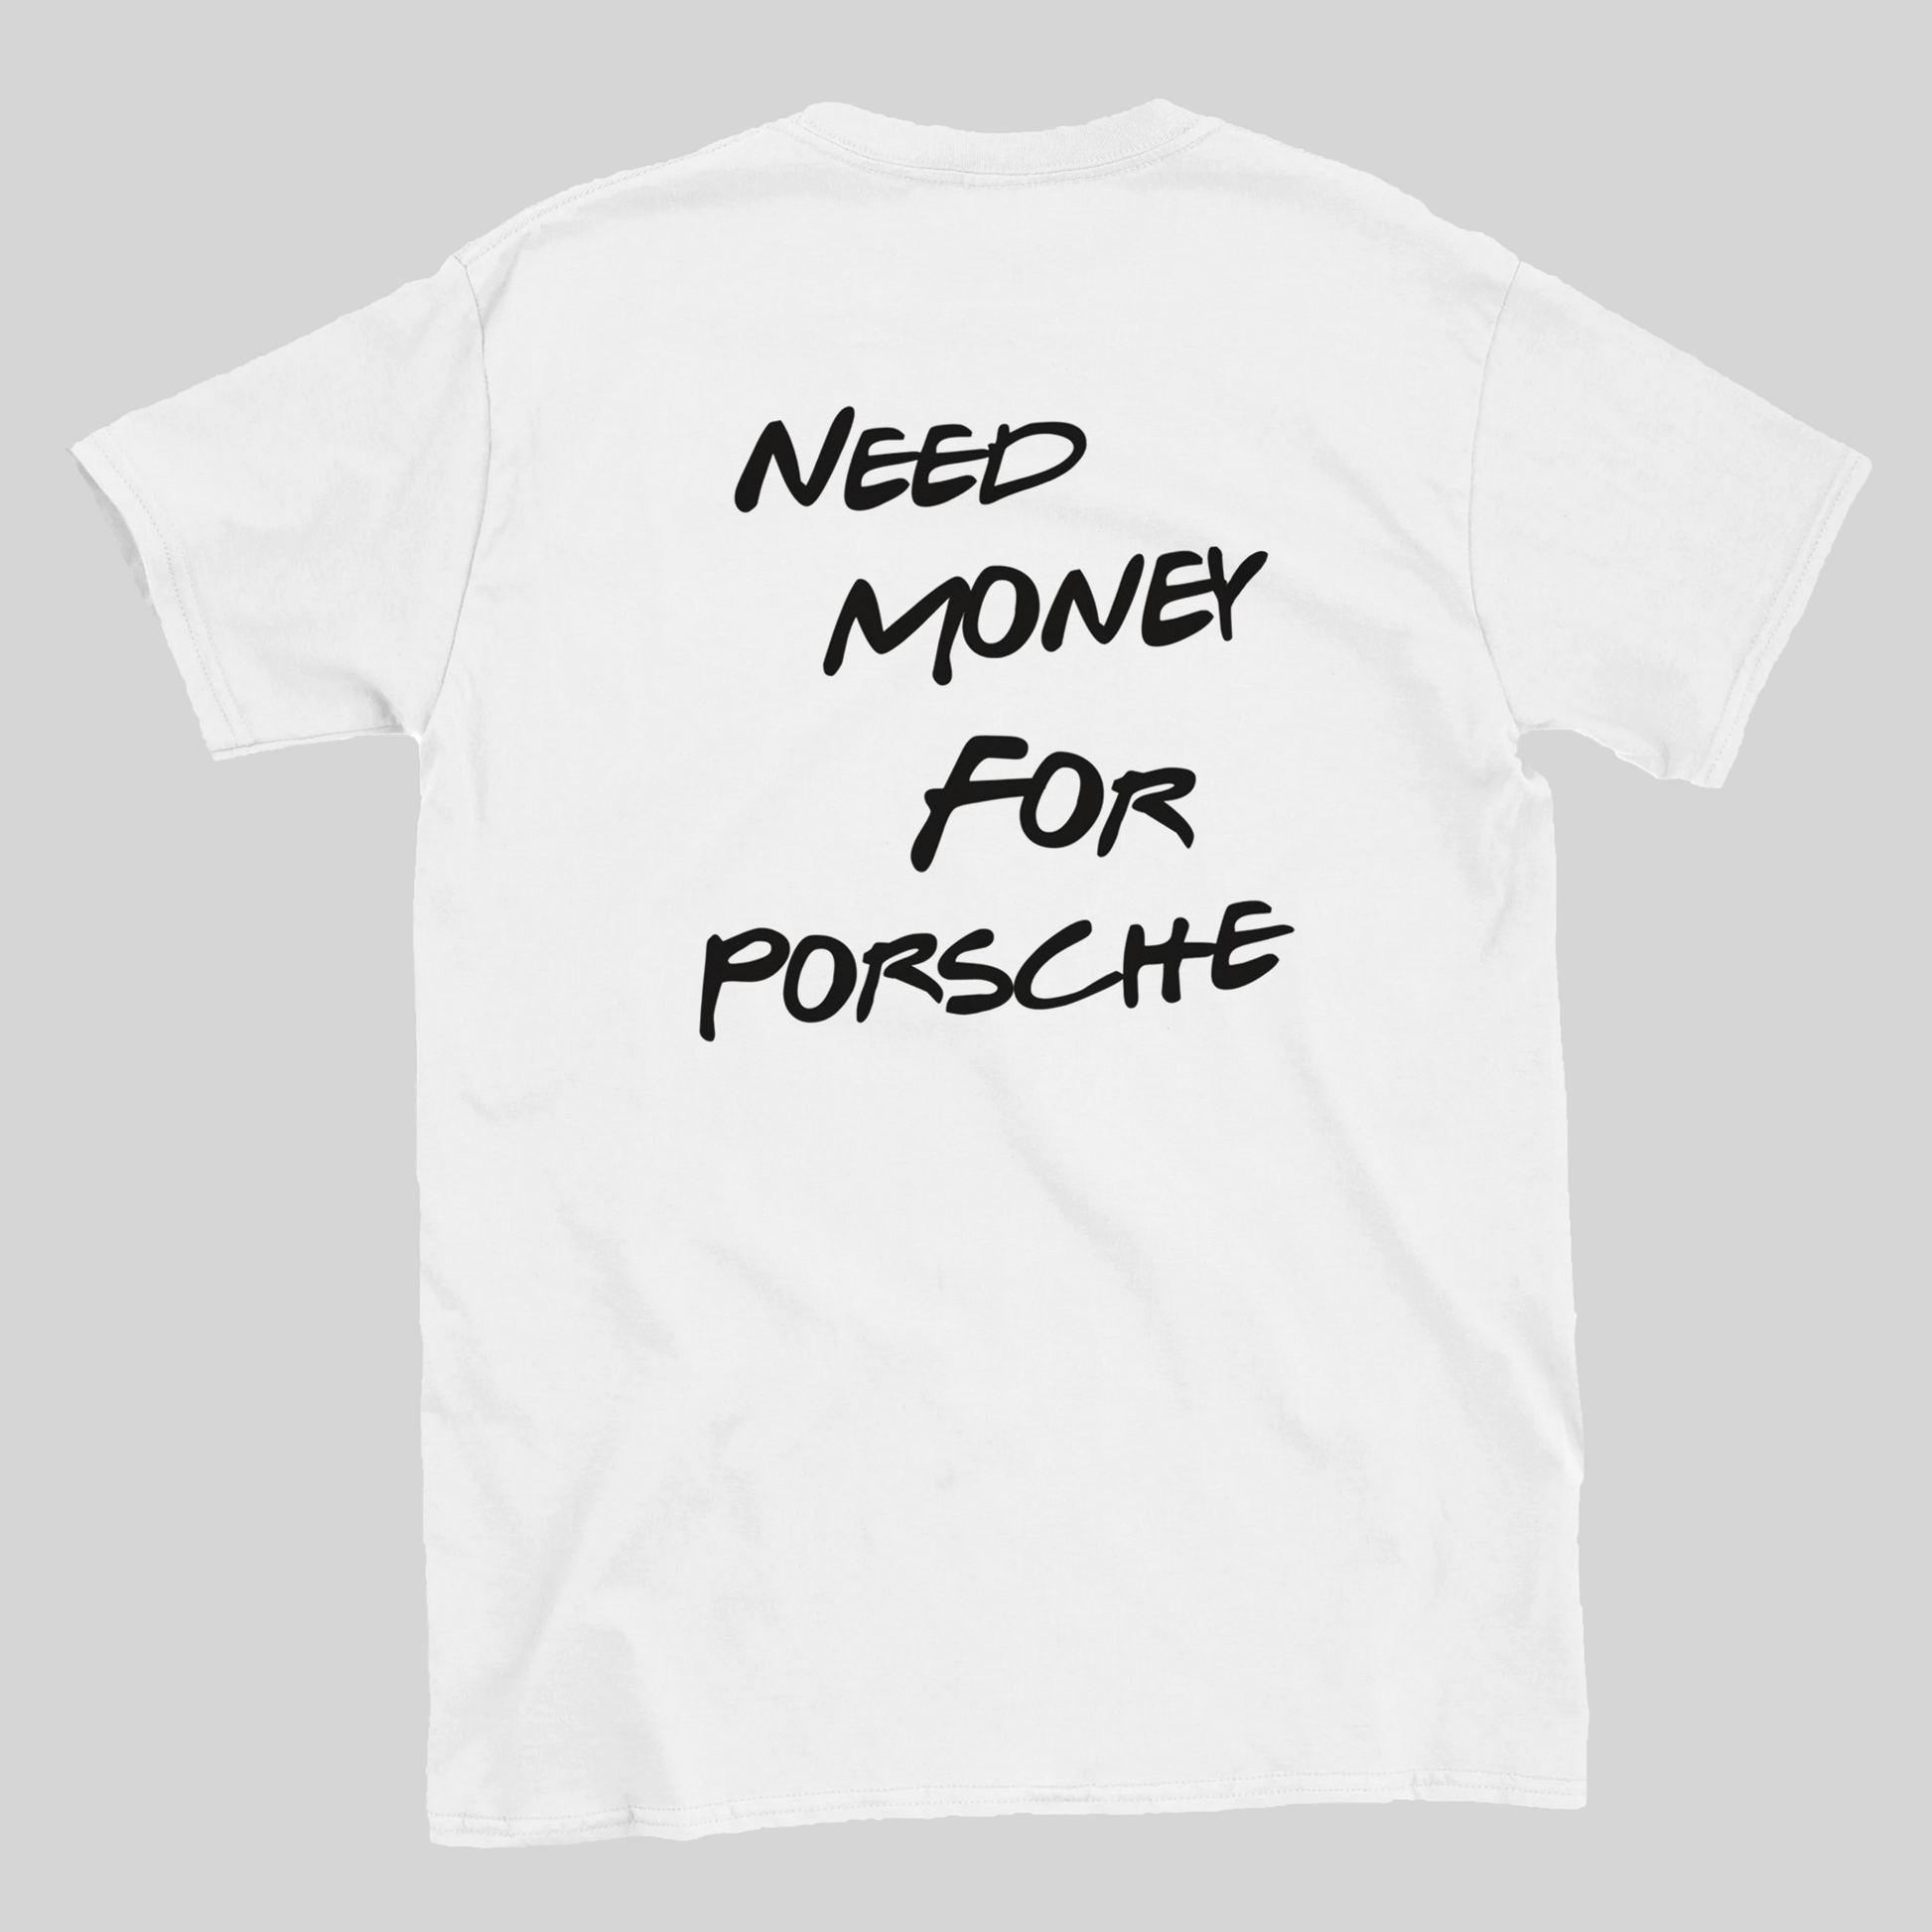 Need money for Porsche shirt white